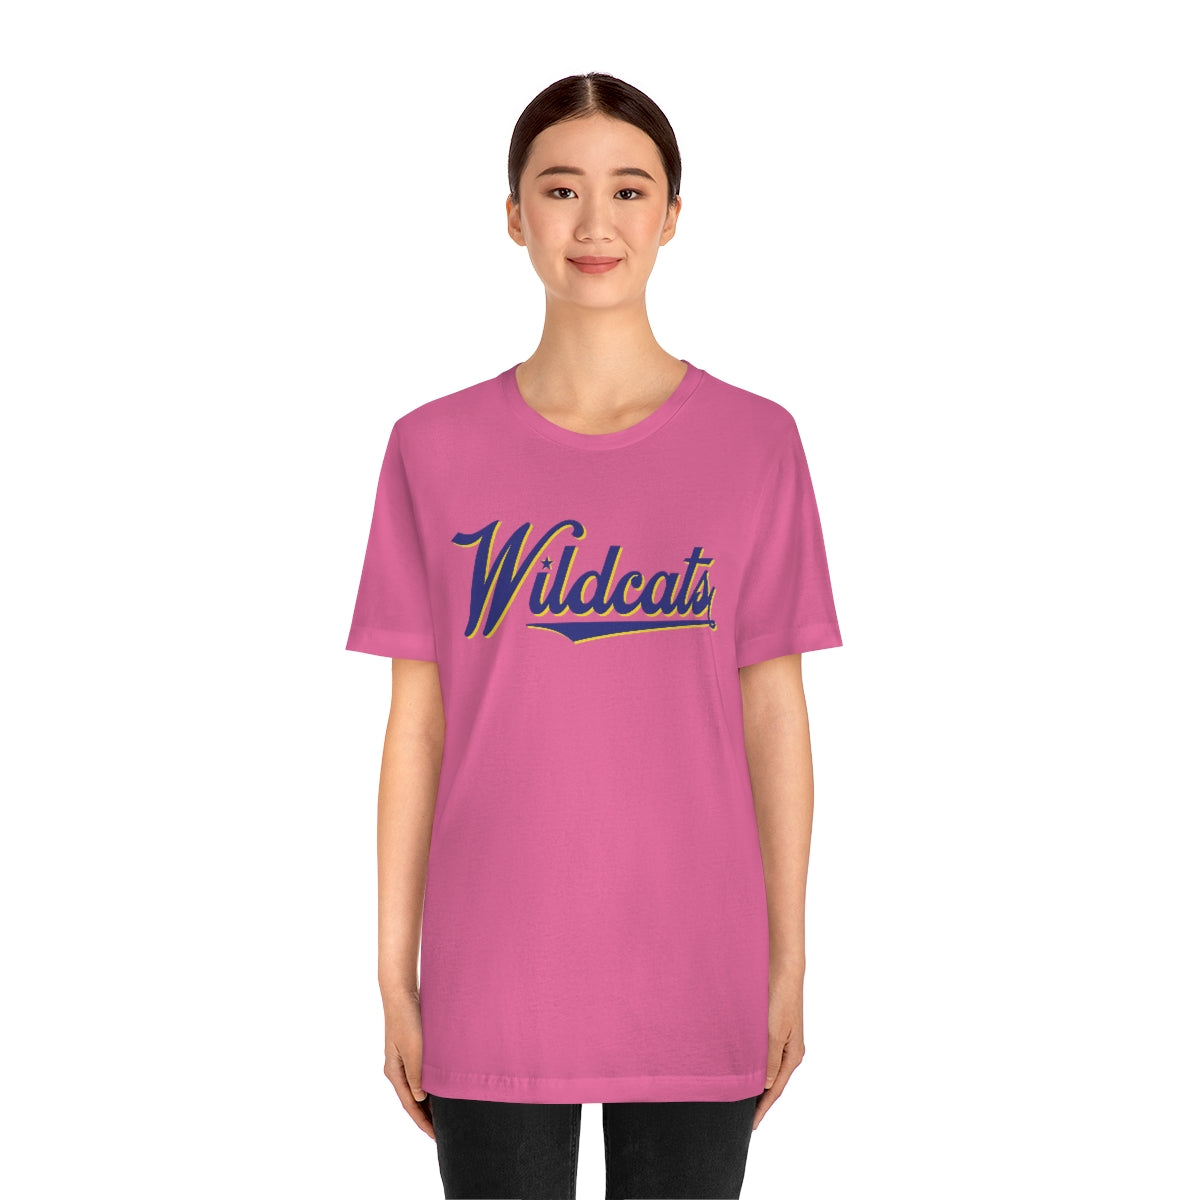 Wildcats Star Adult Unisex Jersey Short Sleeve Tee